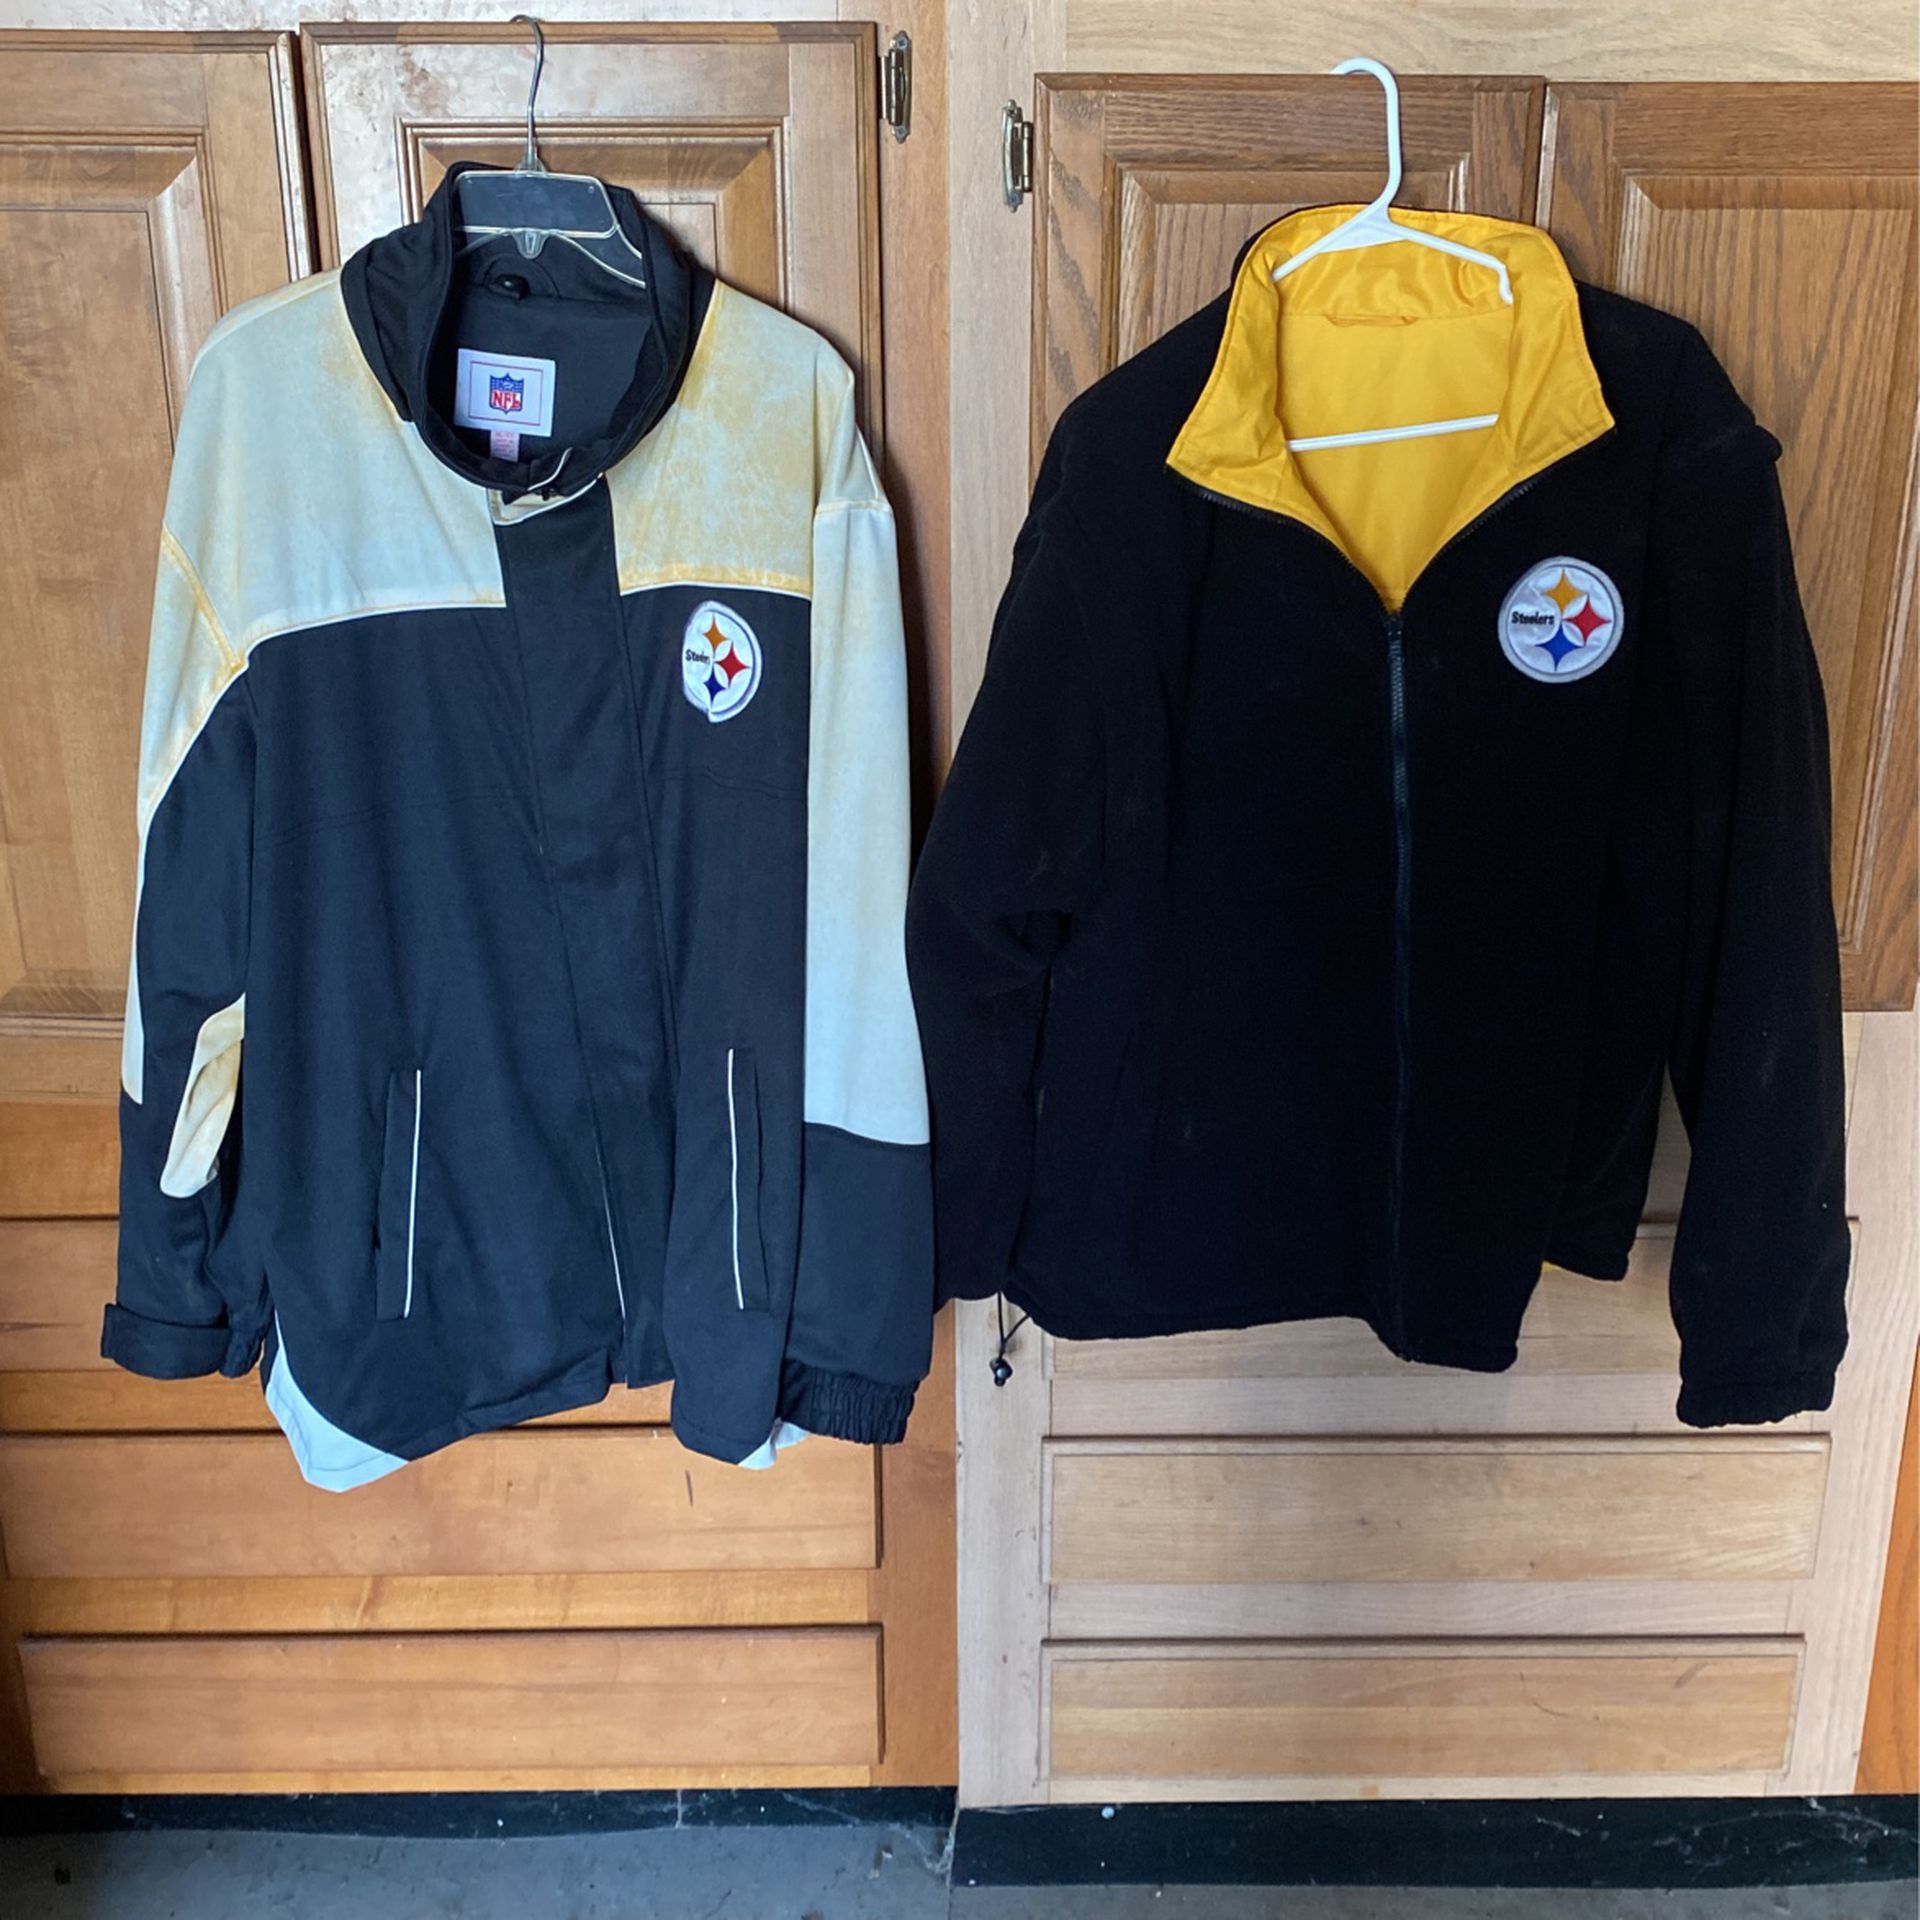 Pittsburgh Steelers jackets